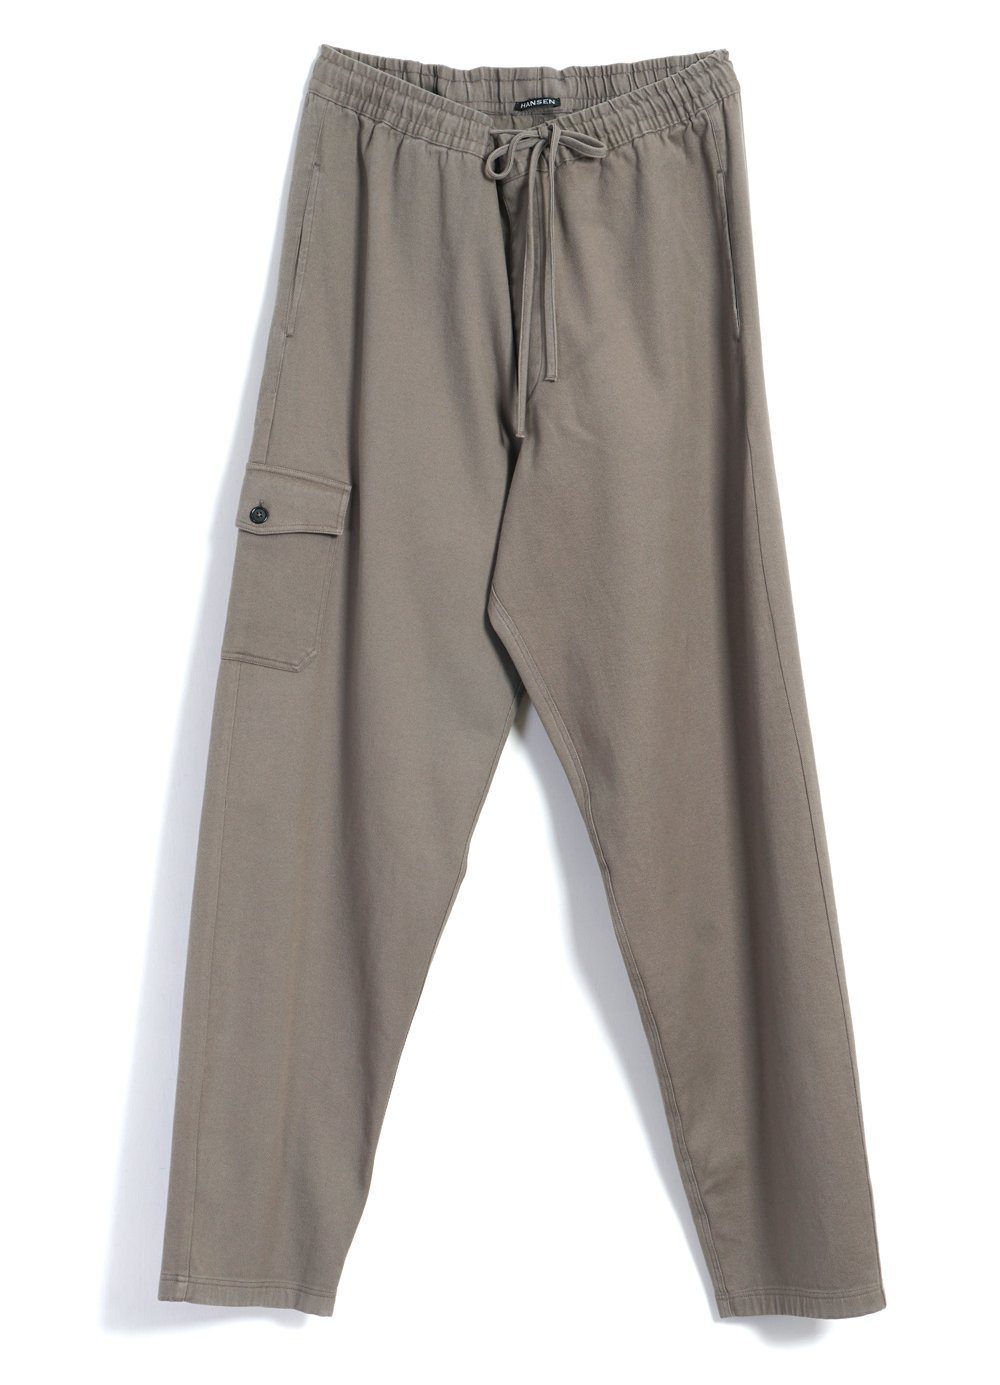 HANSEN GARMENTS - JIMMY | Casual Cargo Drawstring Pants | Light Grey - HANSEN Garments